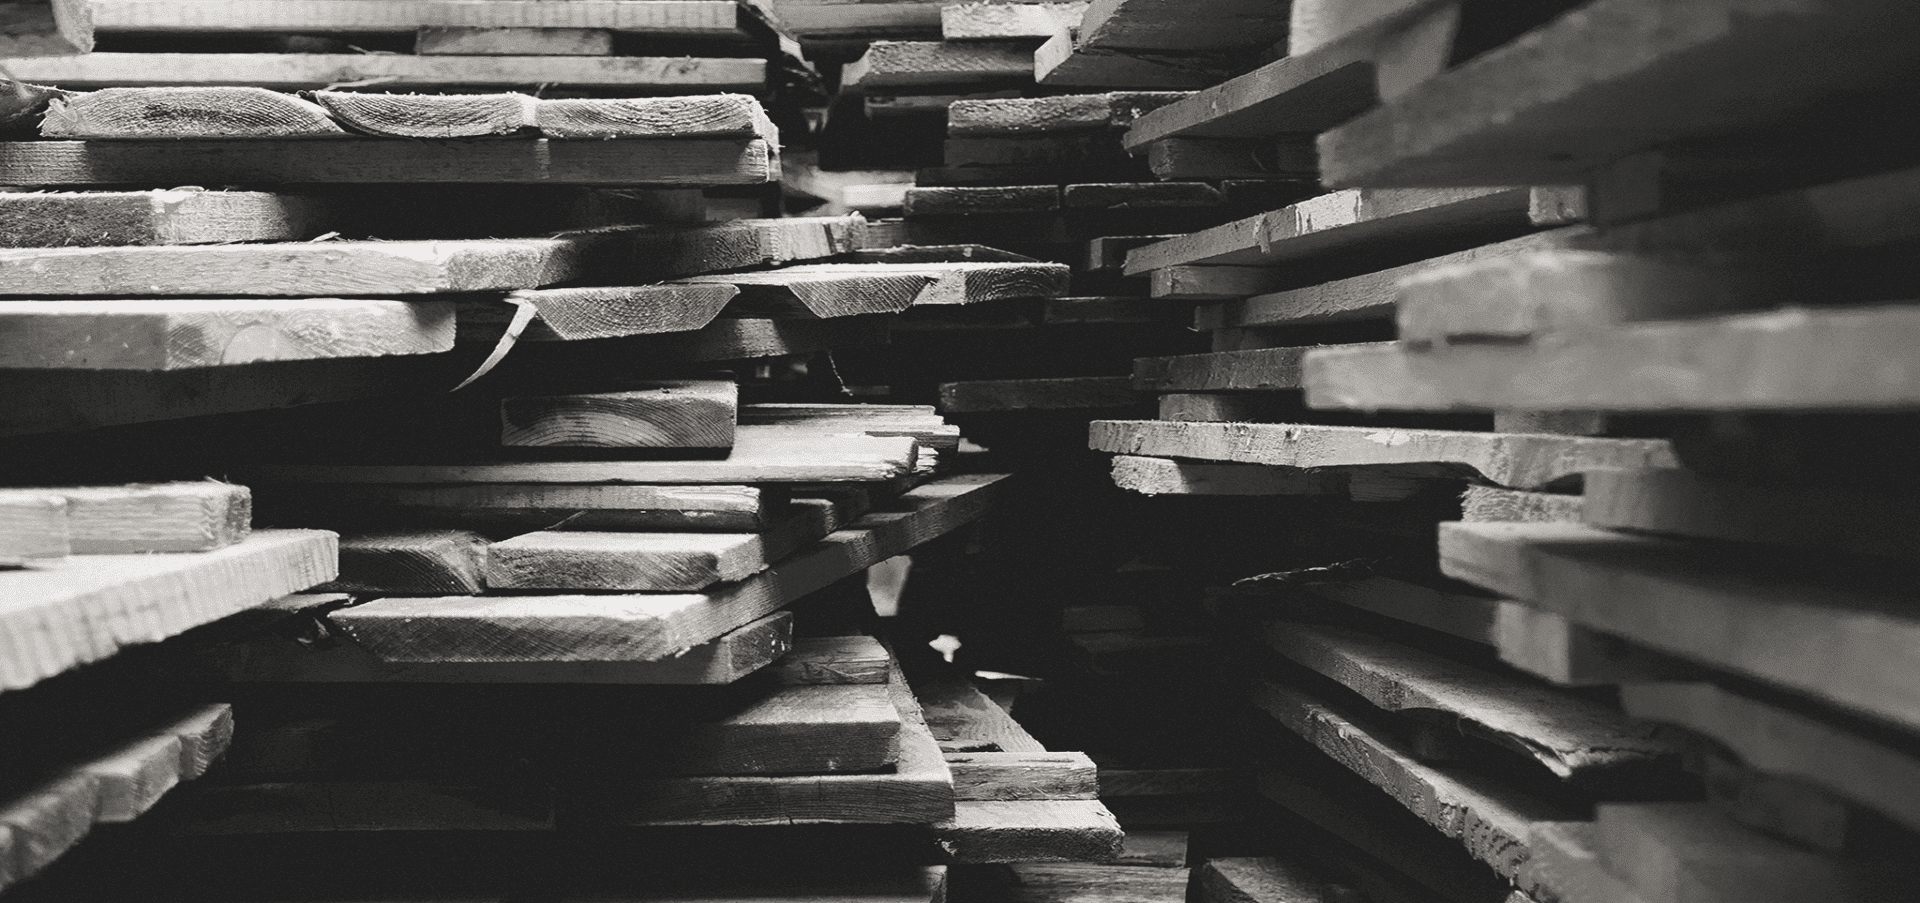 Lumber Pile - Photo by Helen Lee from Pexels